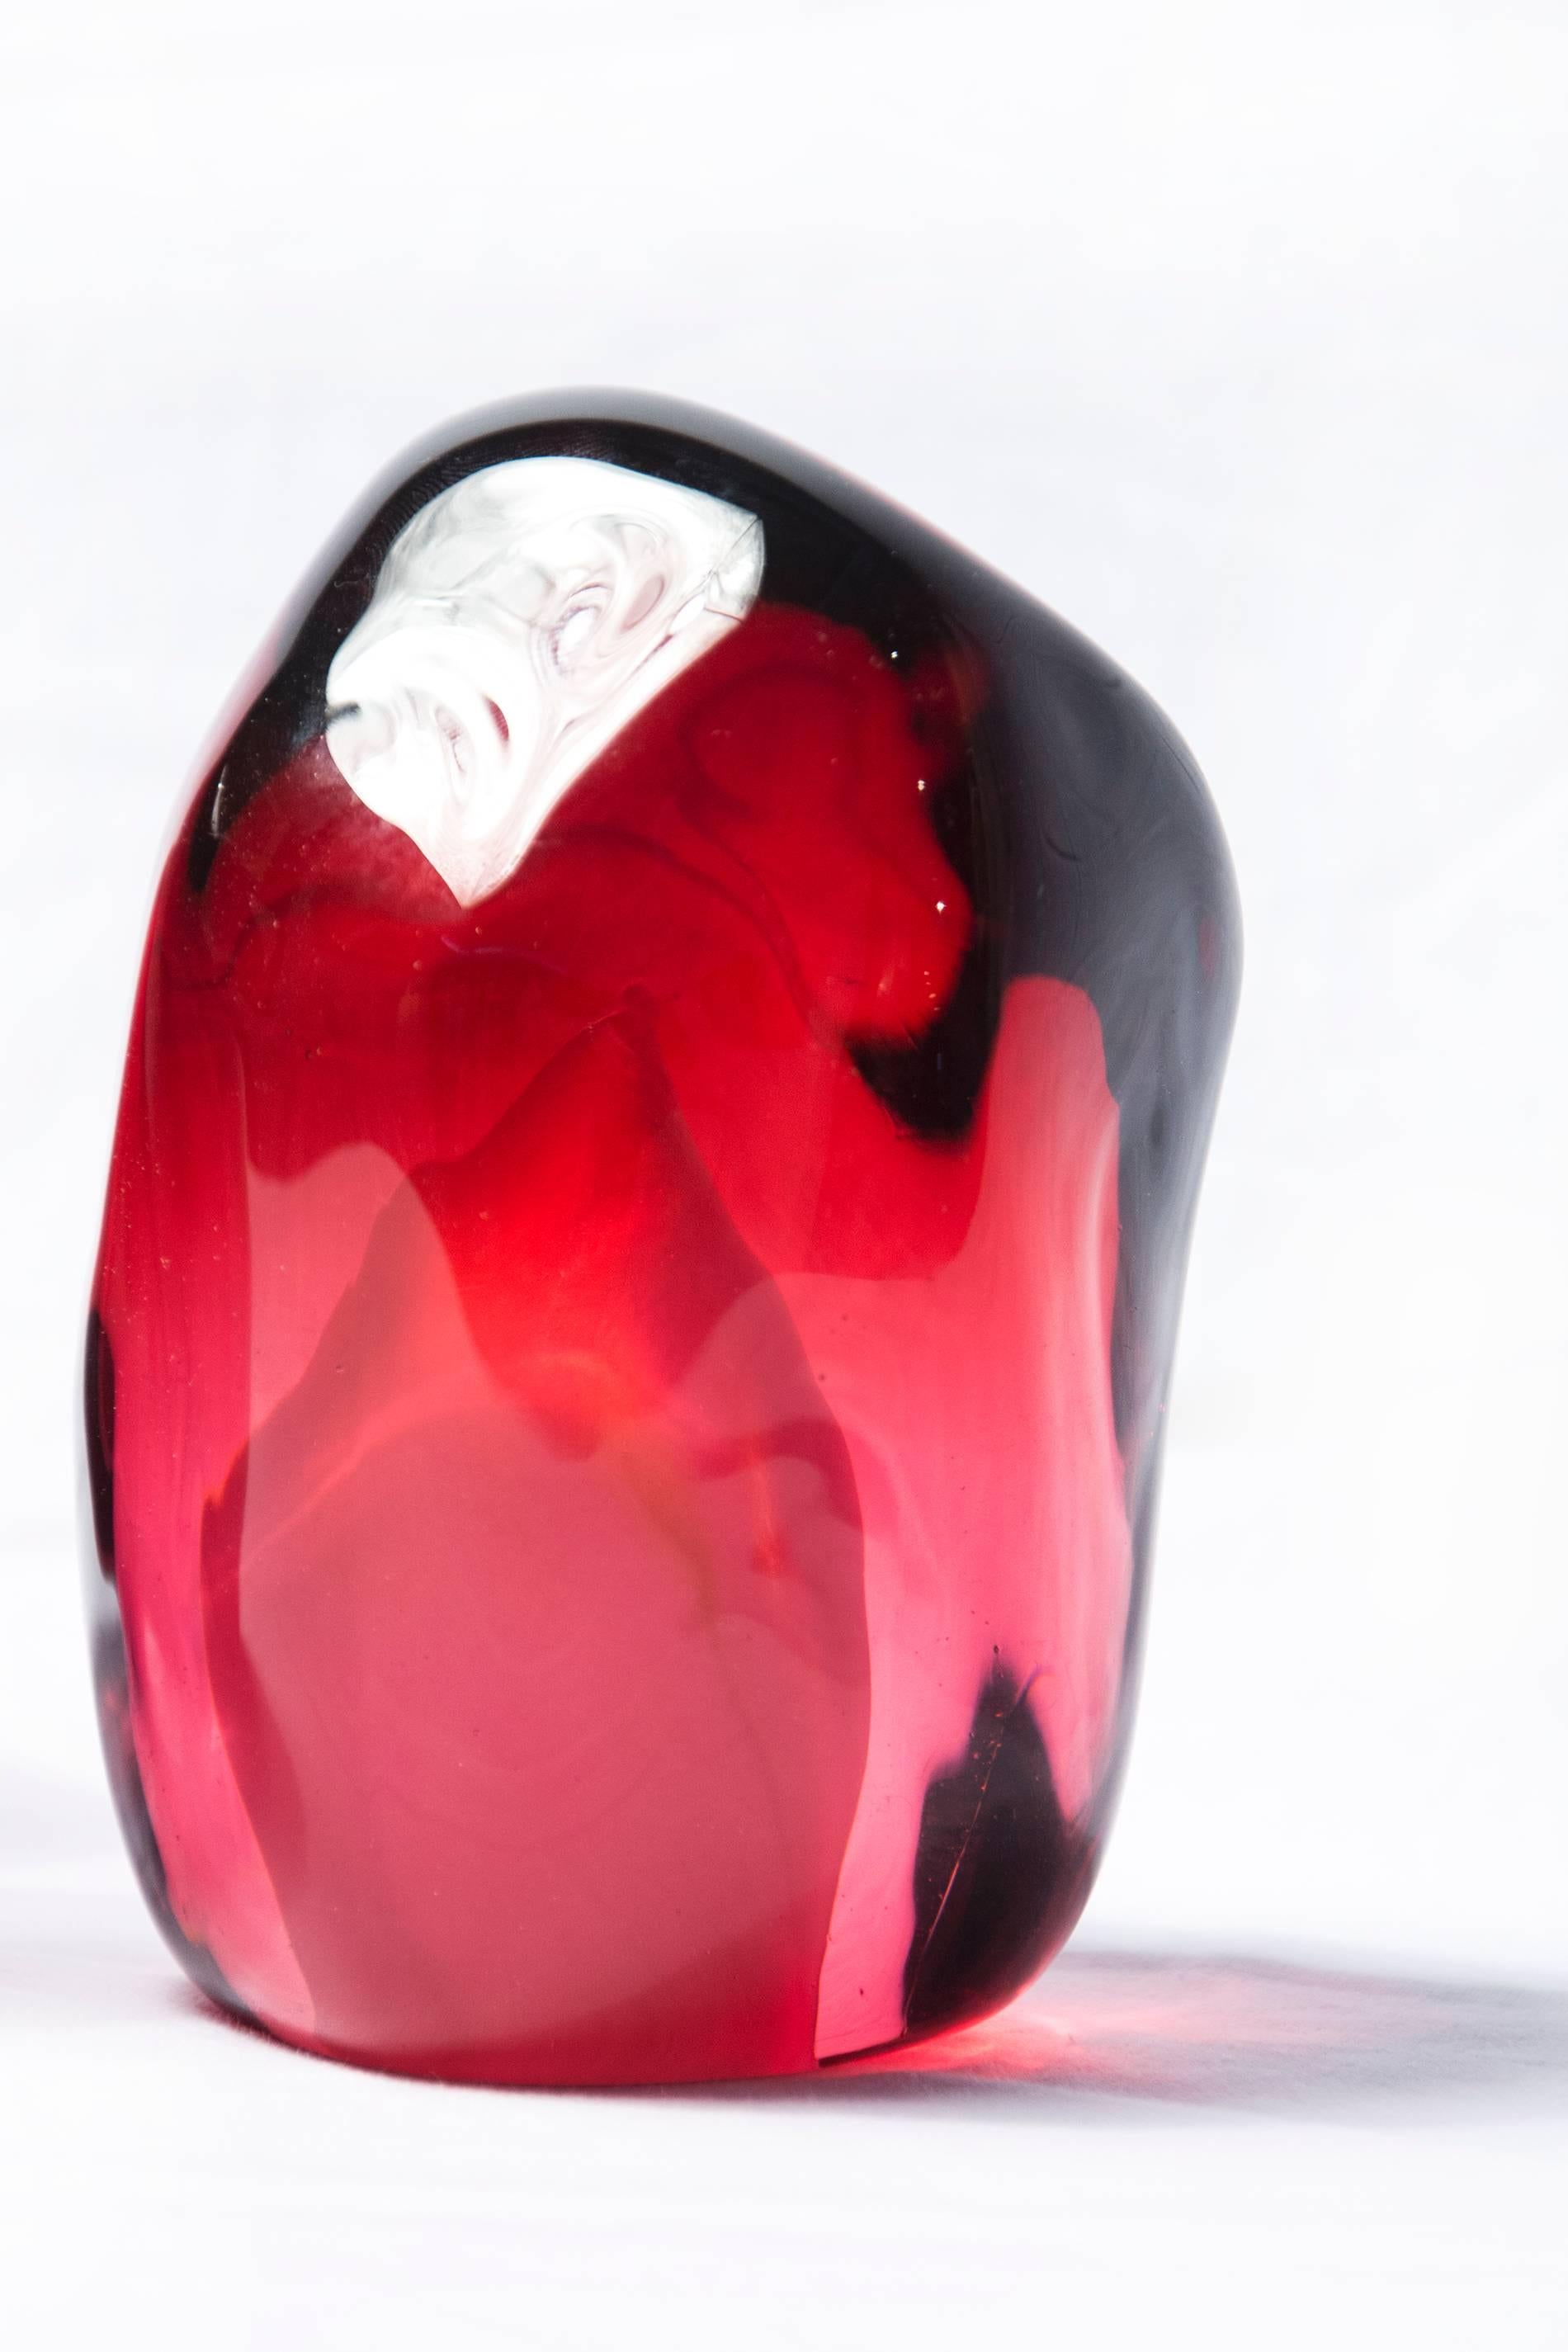 From the Earth : Emergence II - rouge, grenade, verre, sculpture de nature morte - Contemporain Sculpture par Catherine Vamvakas Lay